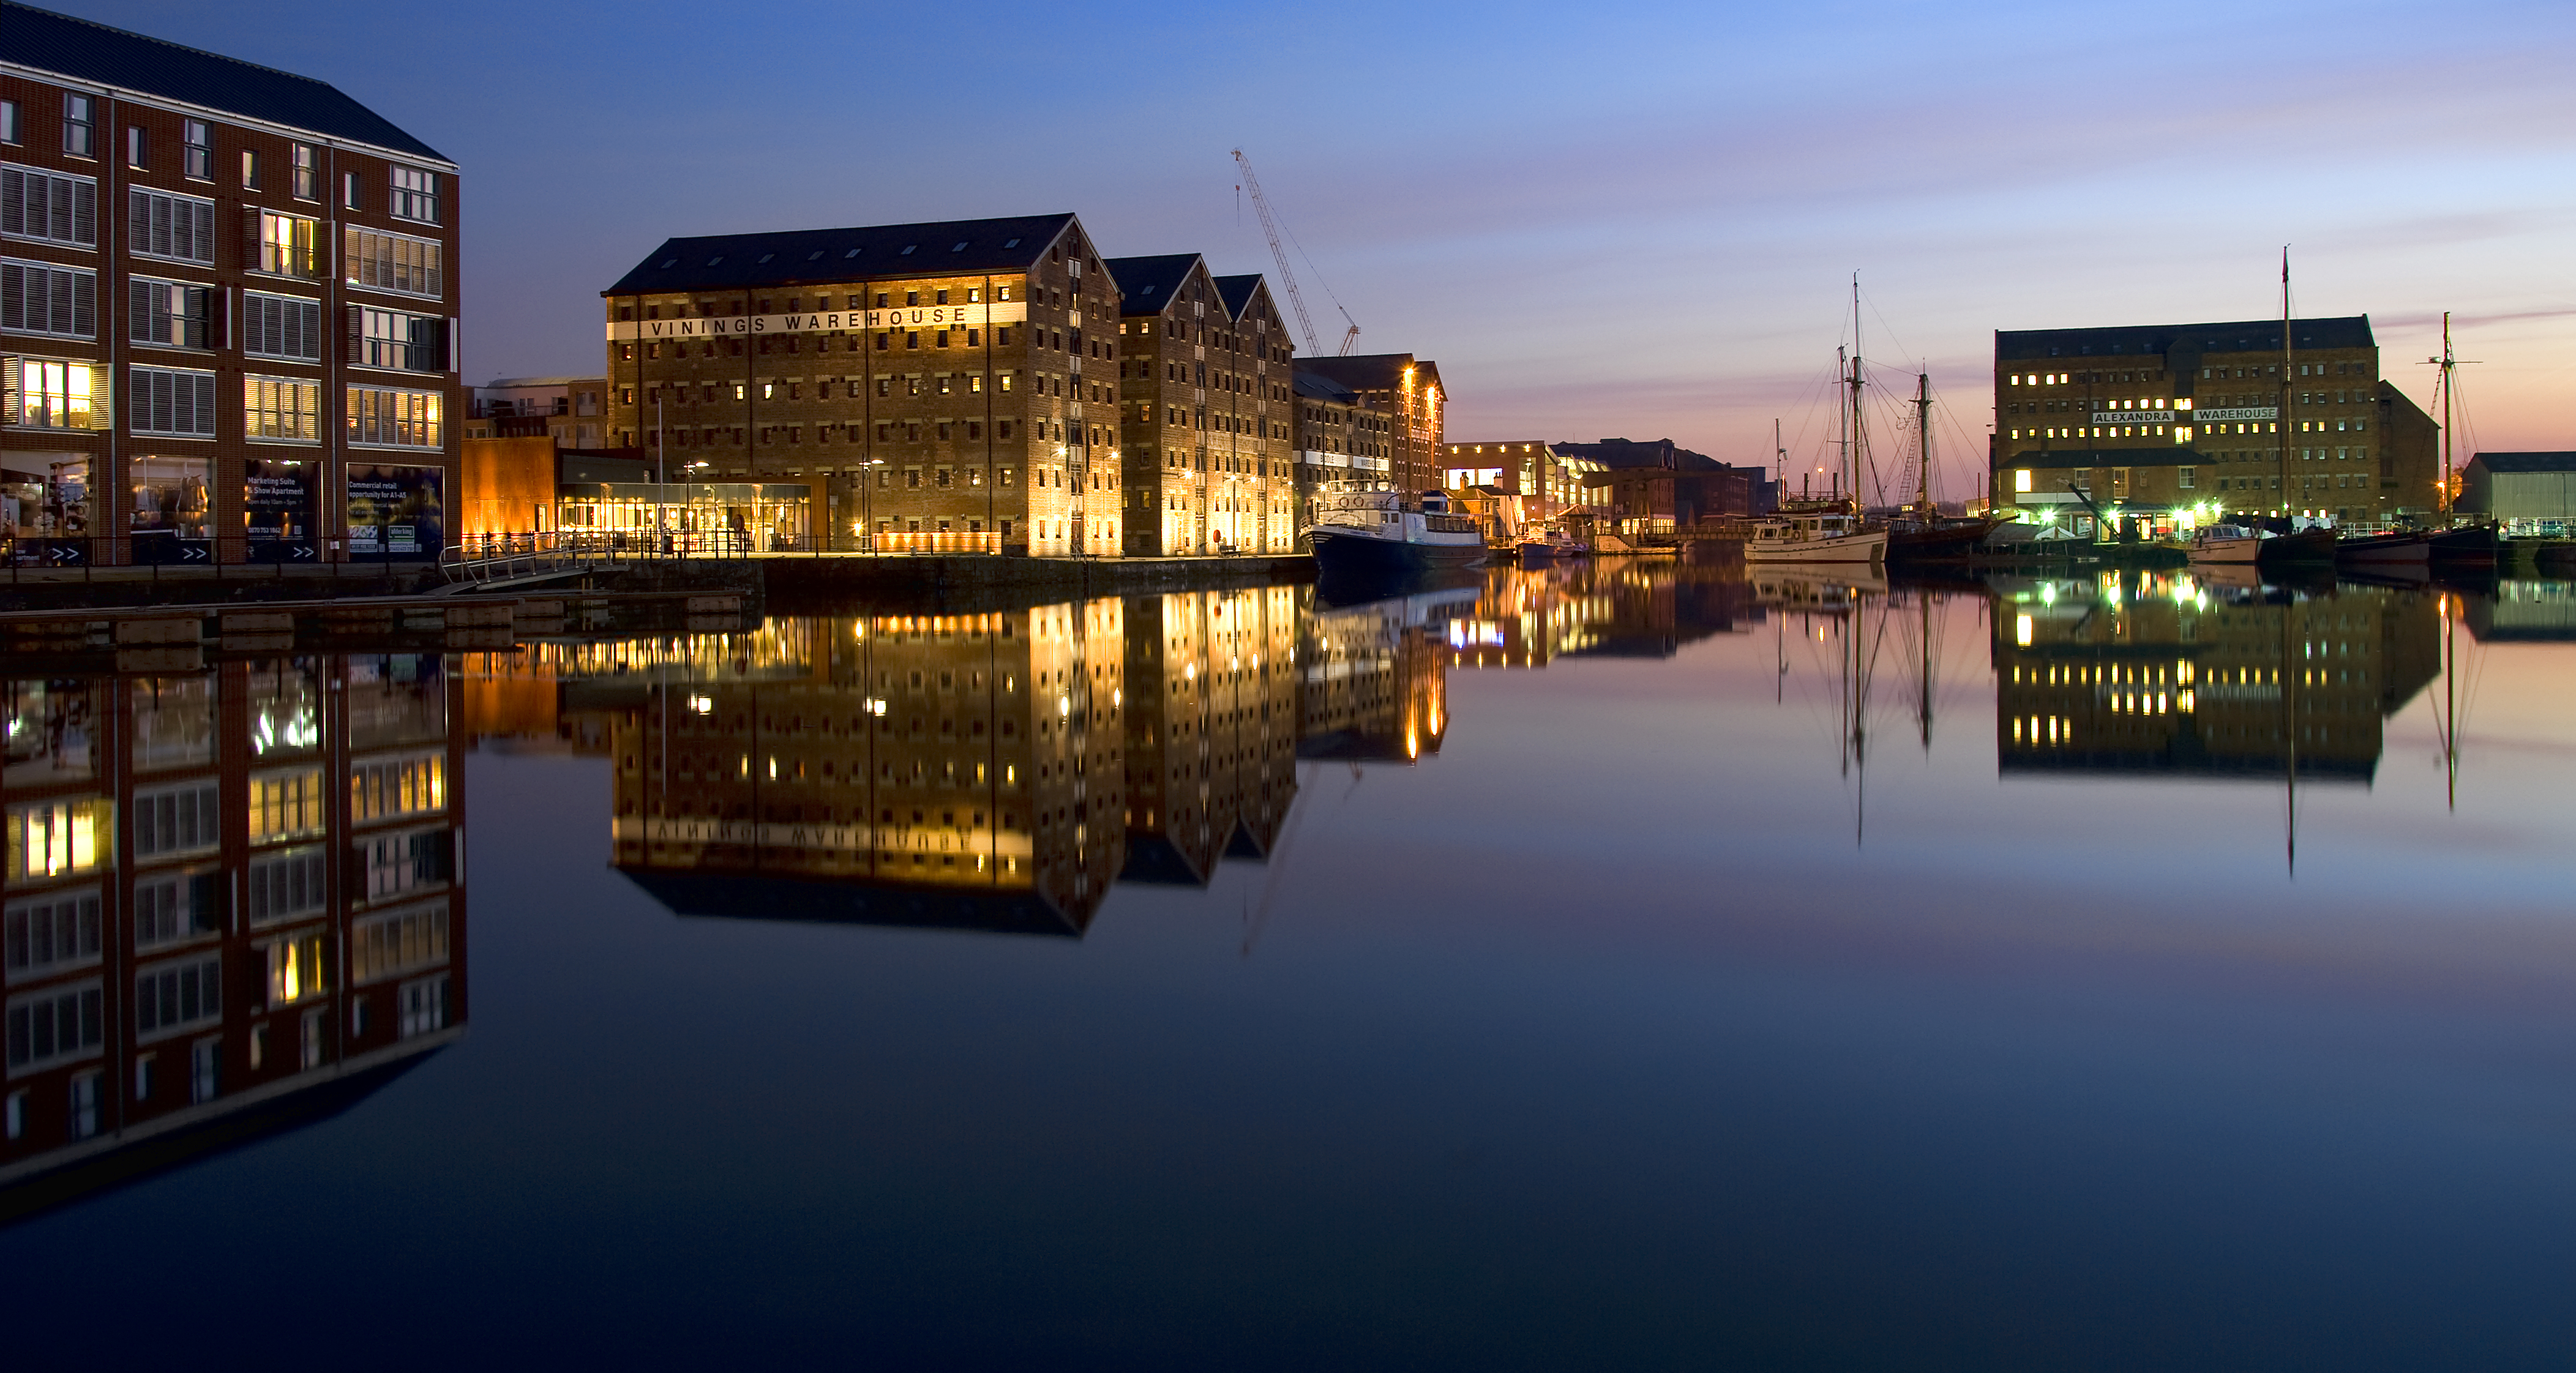 File:Gloucester Docks at Night.jpeg - Wikimedia Commons